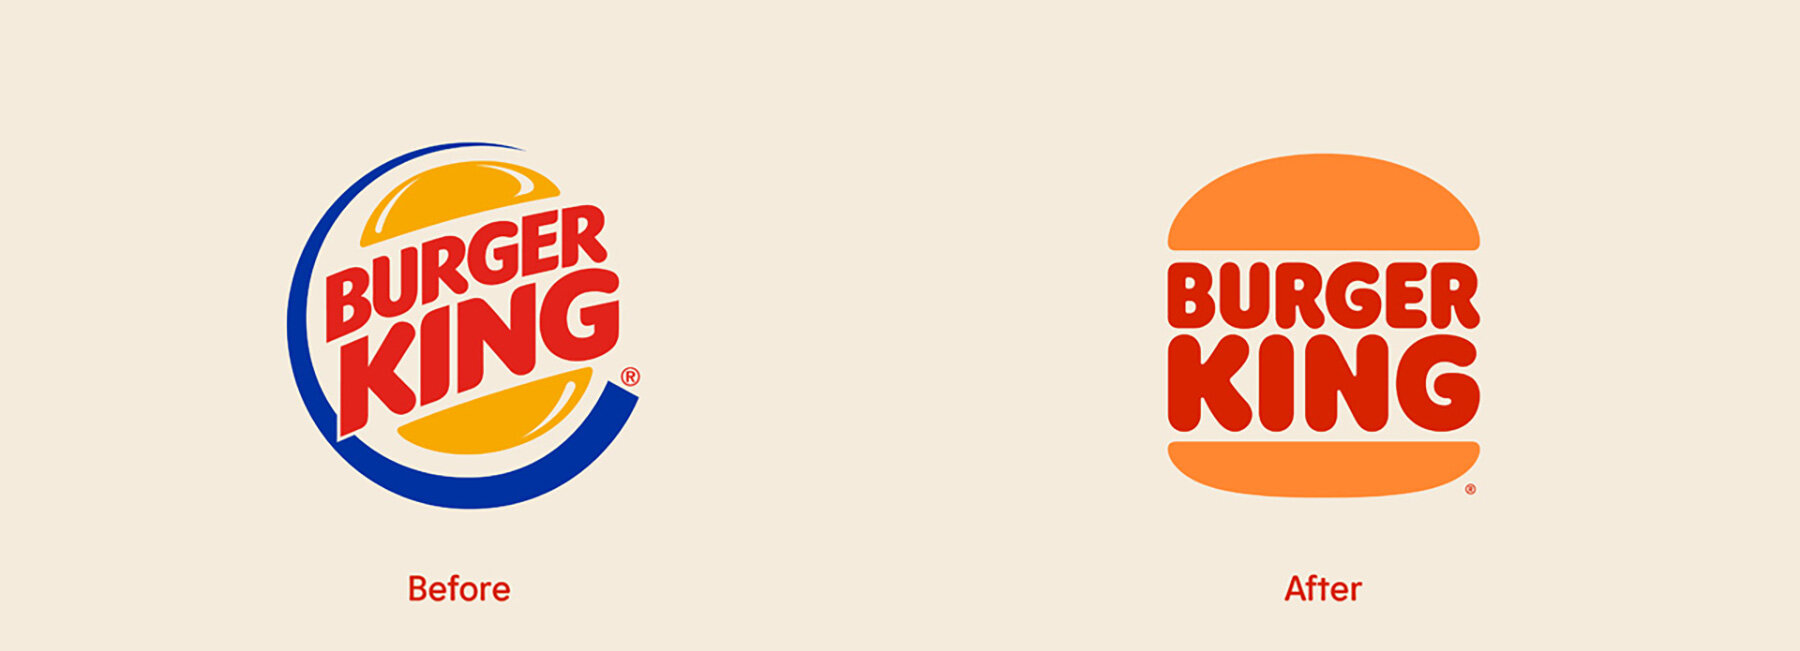 burger-king-new-logo-designboom-1800.jpg